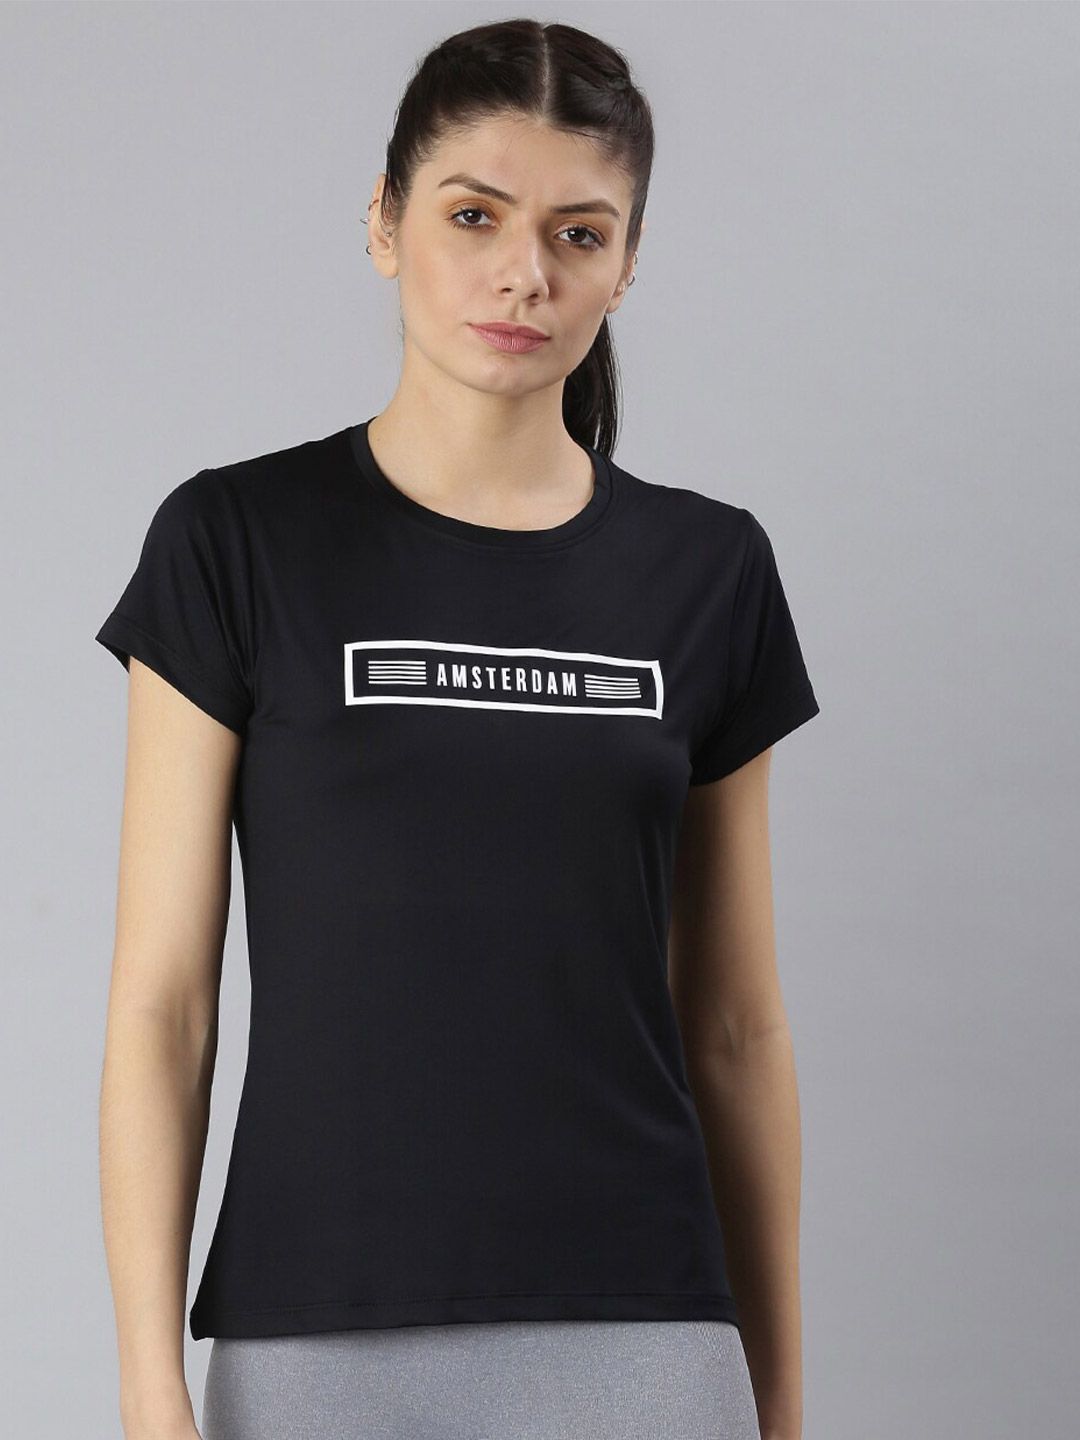 MKH Women Black Typography Printed Round Neck Dri-FIT T-shirt Price in India